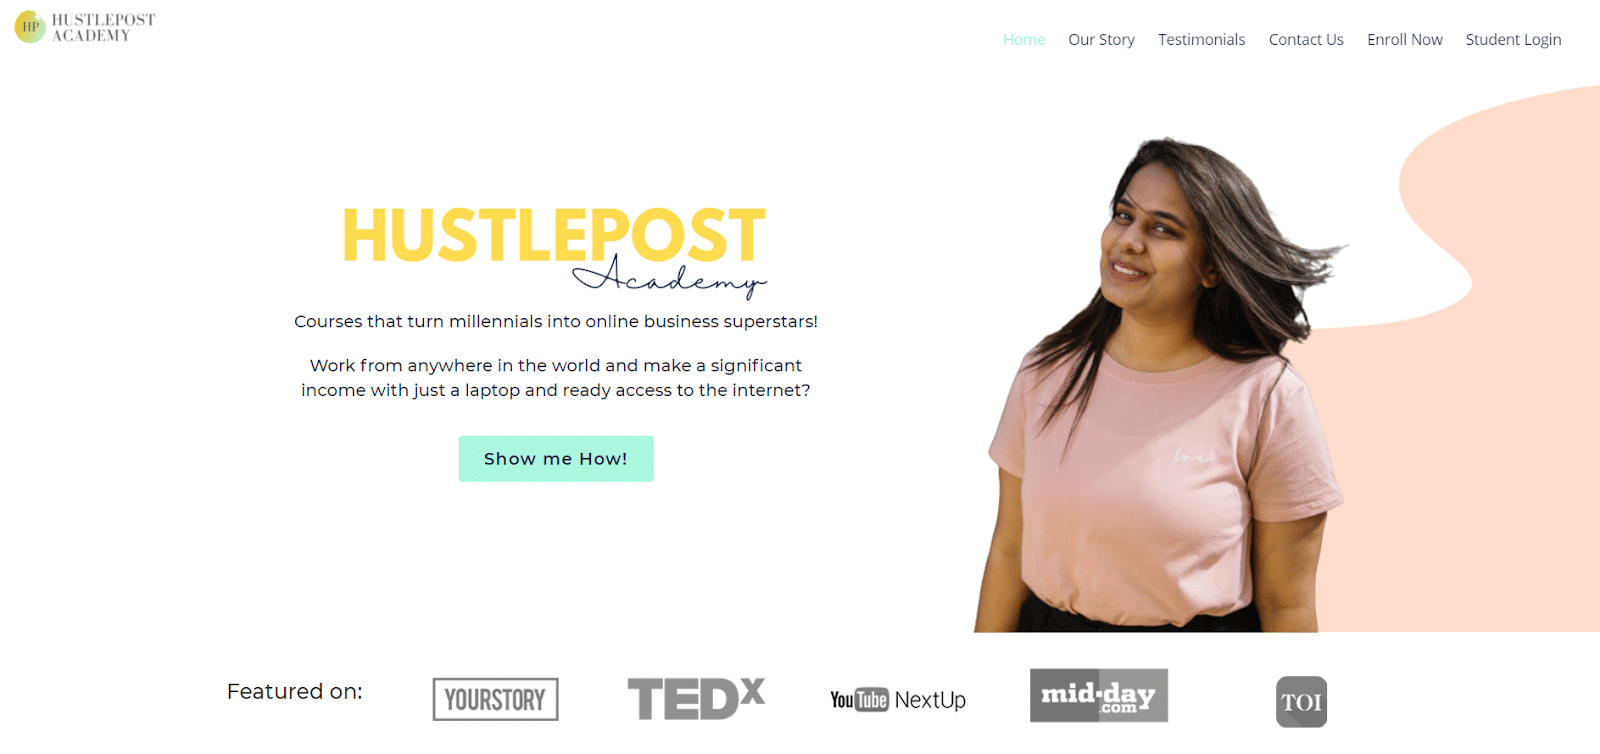 HustlePost Academy - Online School